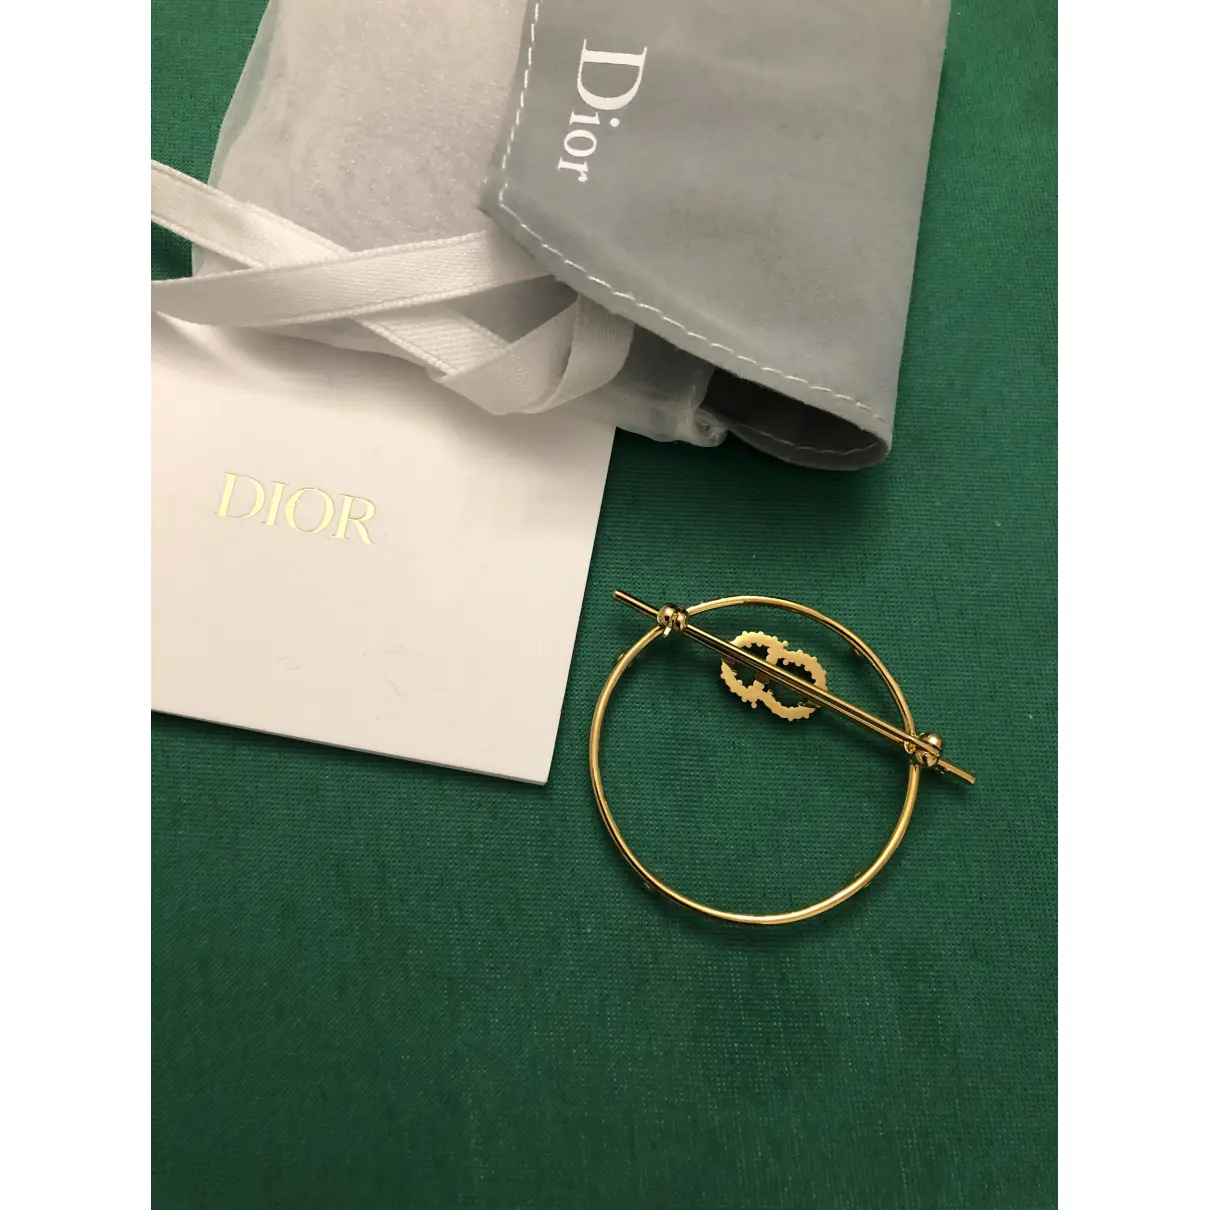 Buy Dior Pin & brooche online